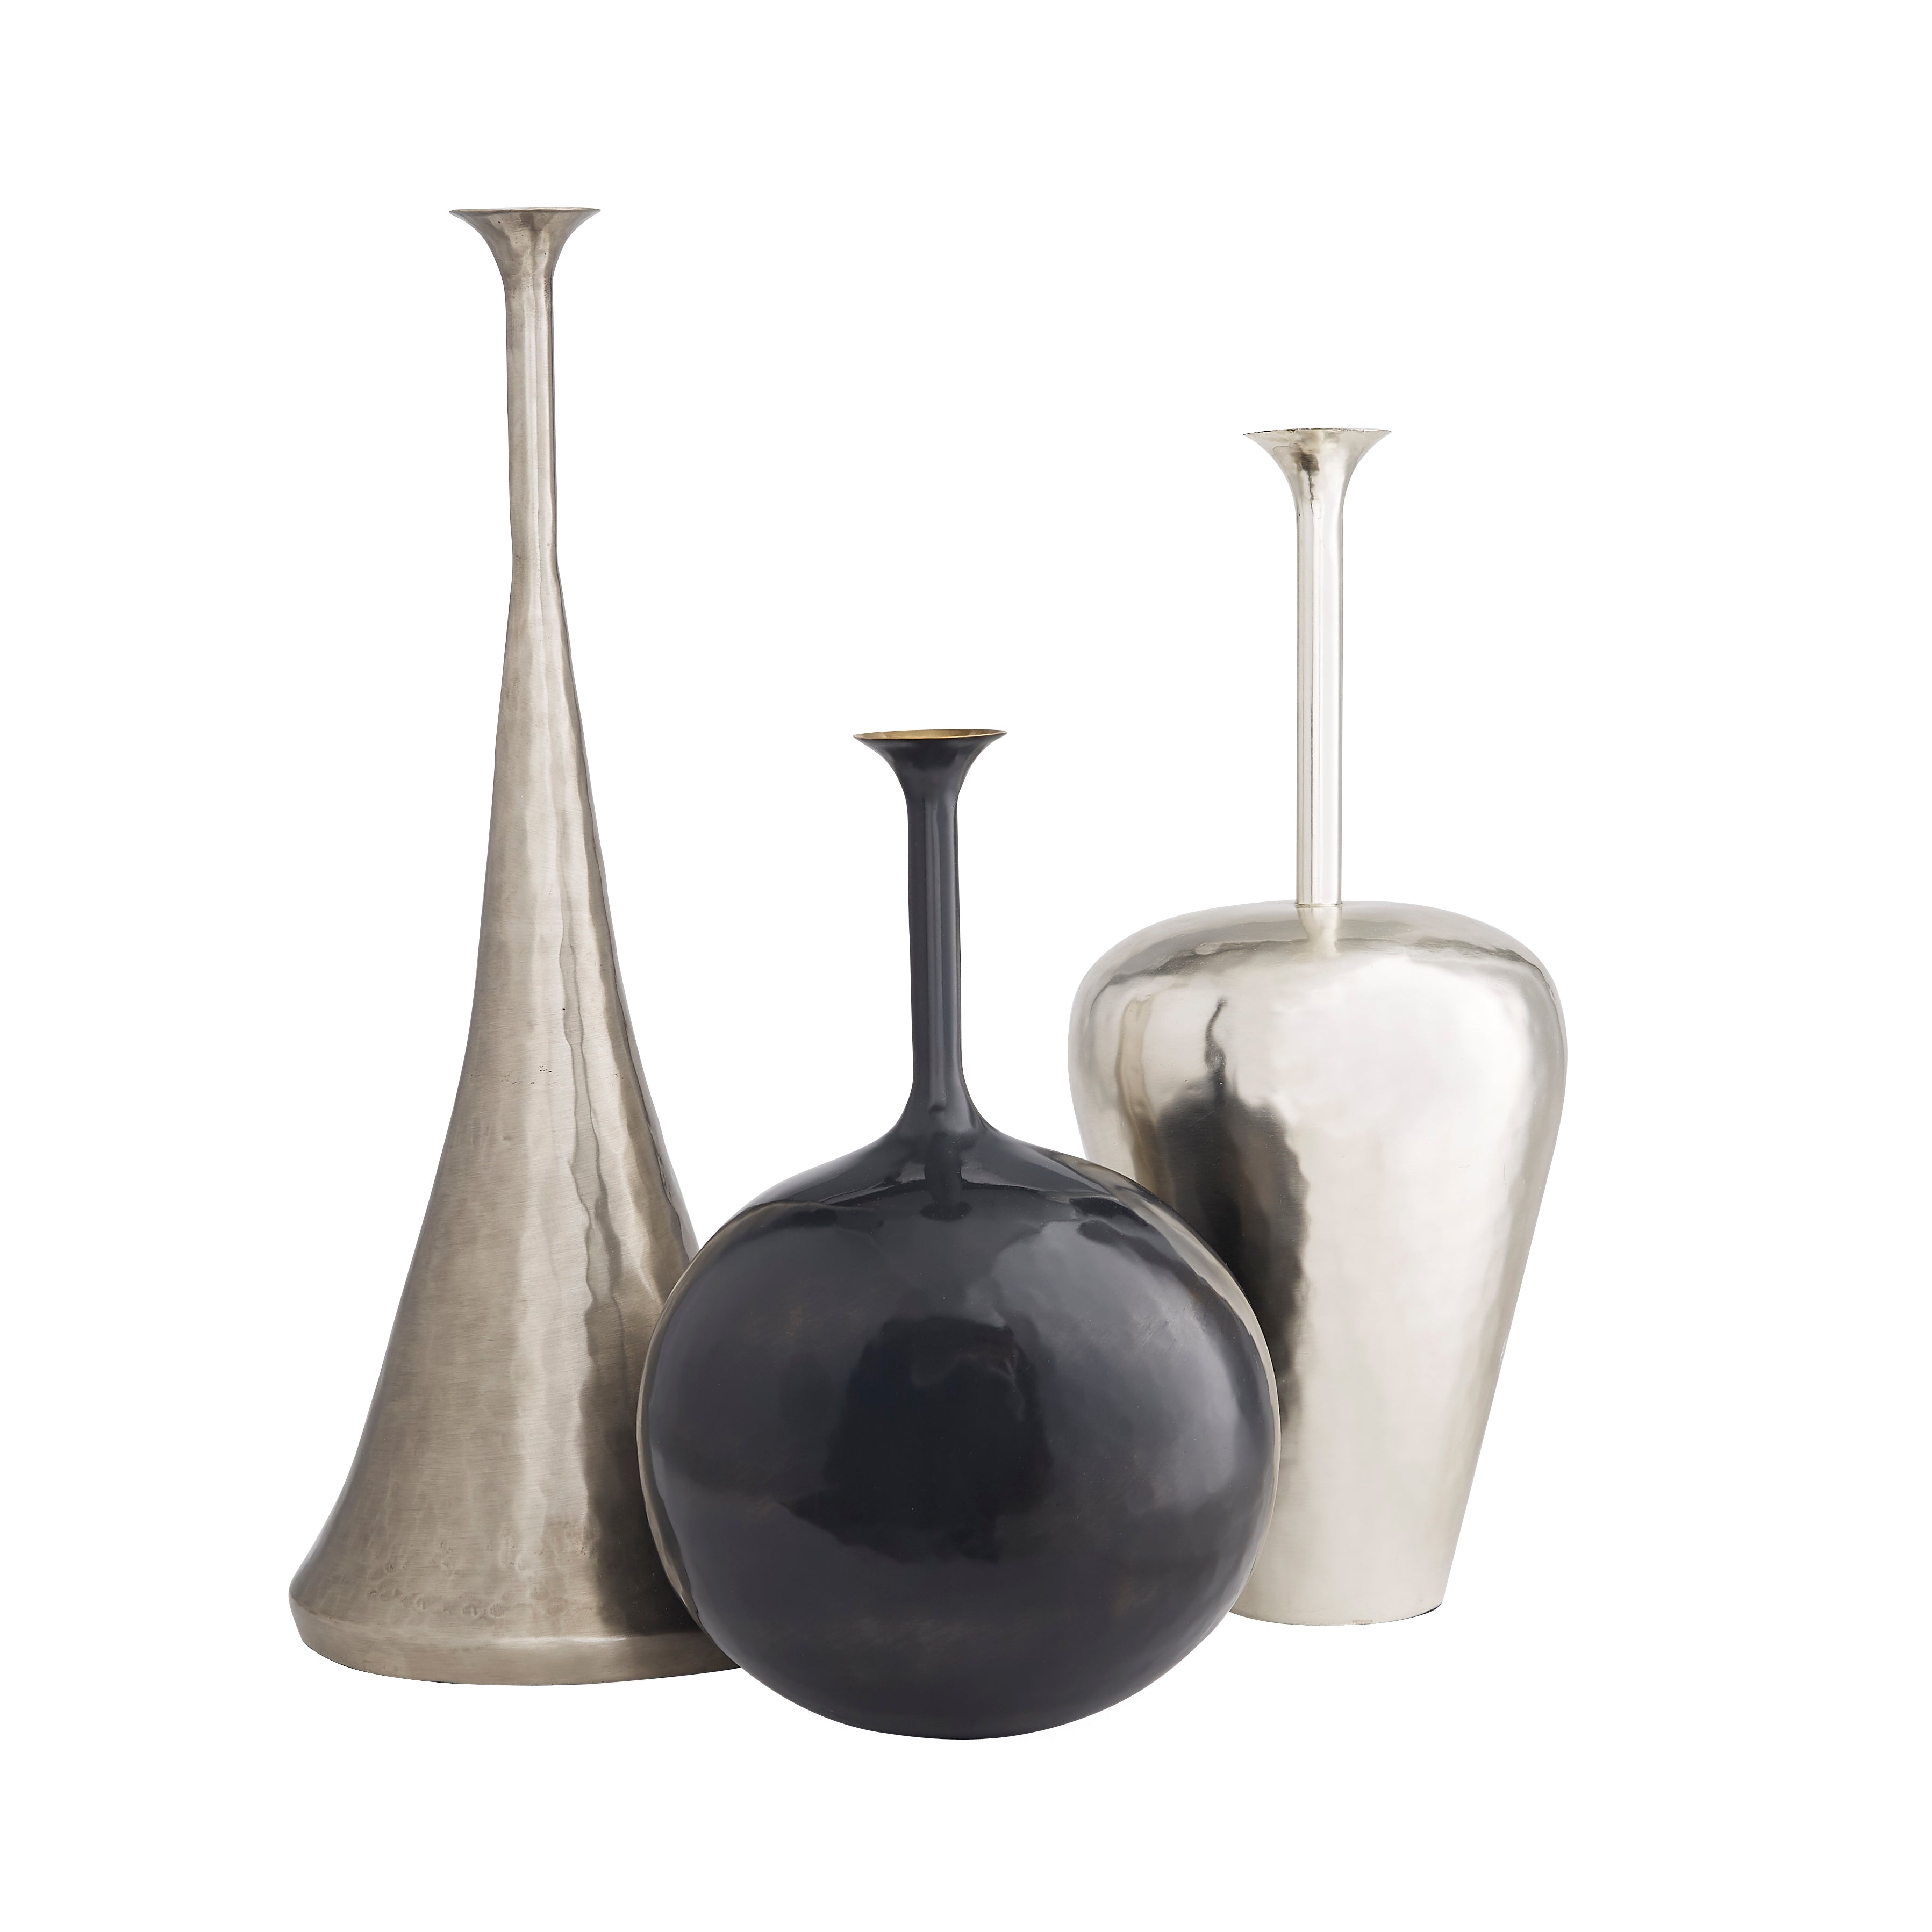 Arteriors Gyles Vases, Set of 3 4858 Décor/Home Accent Arteriors   